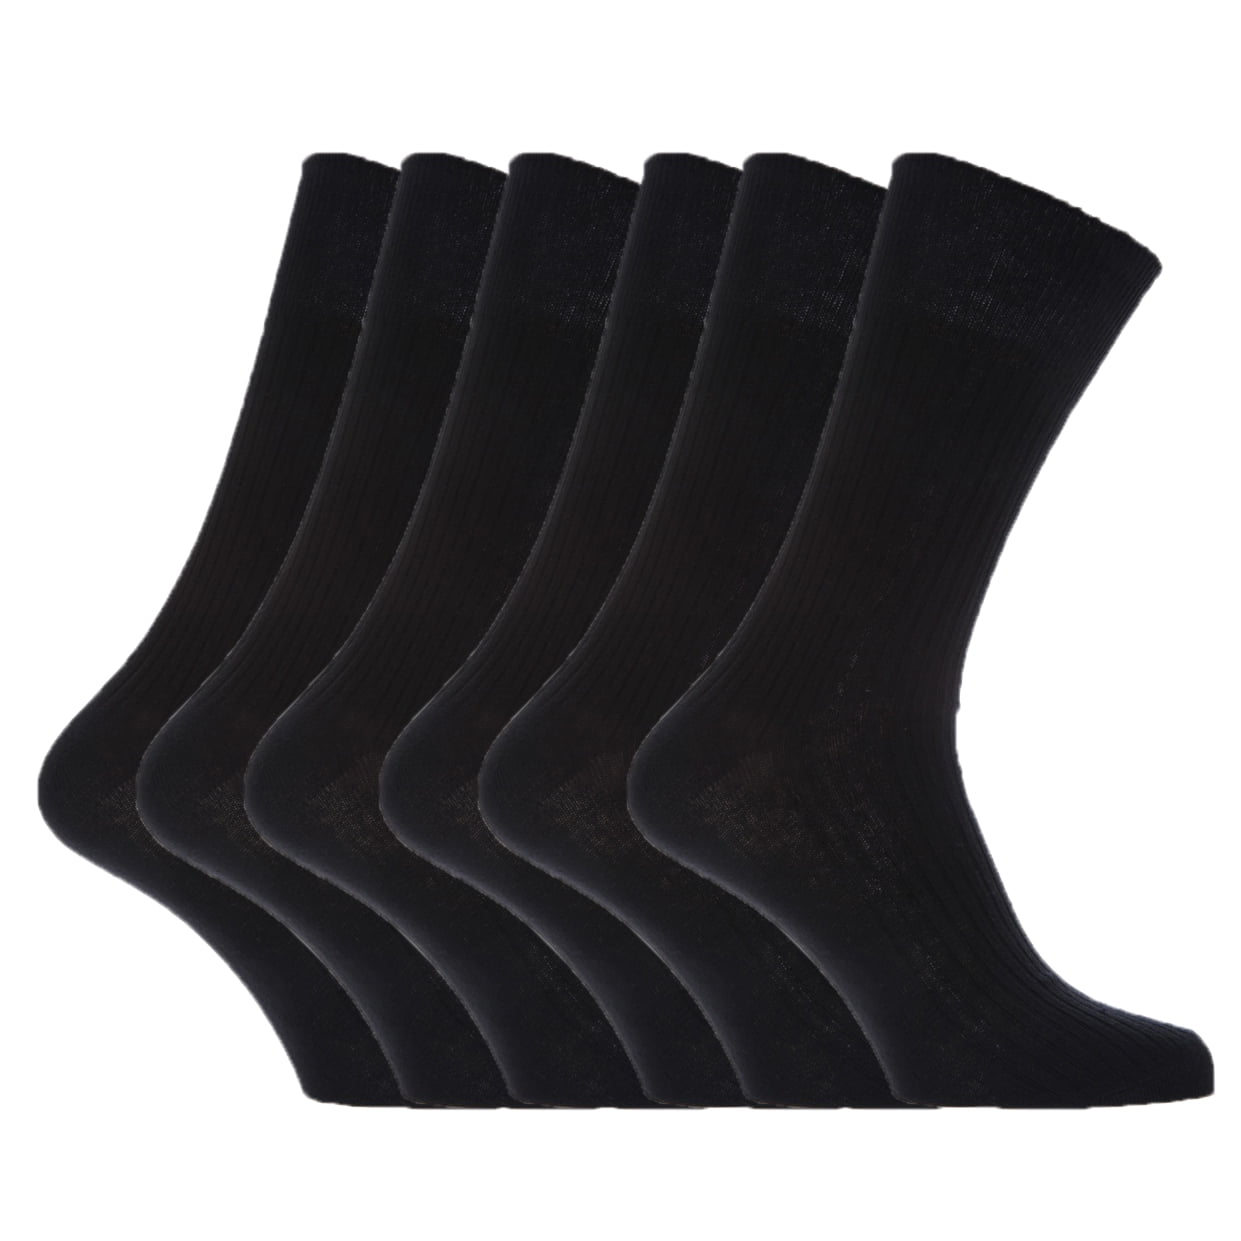 3 Mens STAY-UP Cotton Viloft® THERMAL Non Elastic DIABETIC Socks UK 6-11 